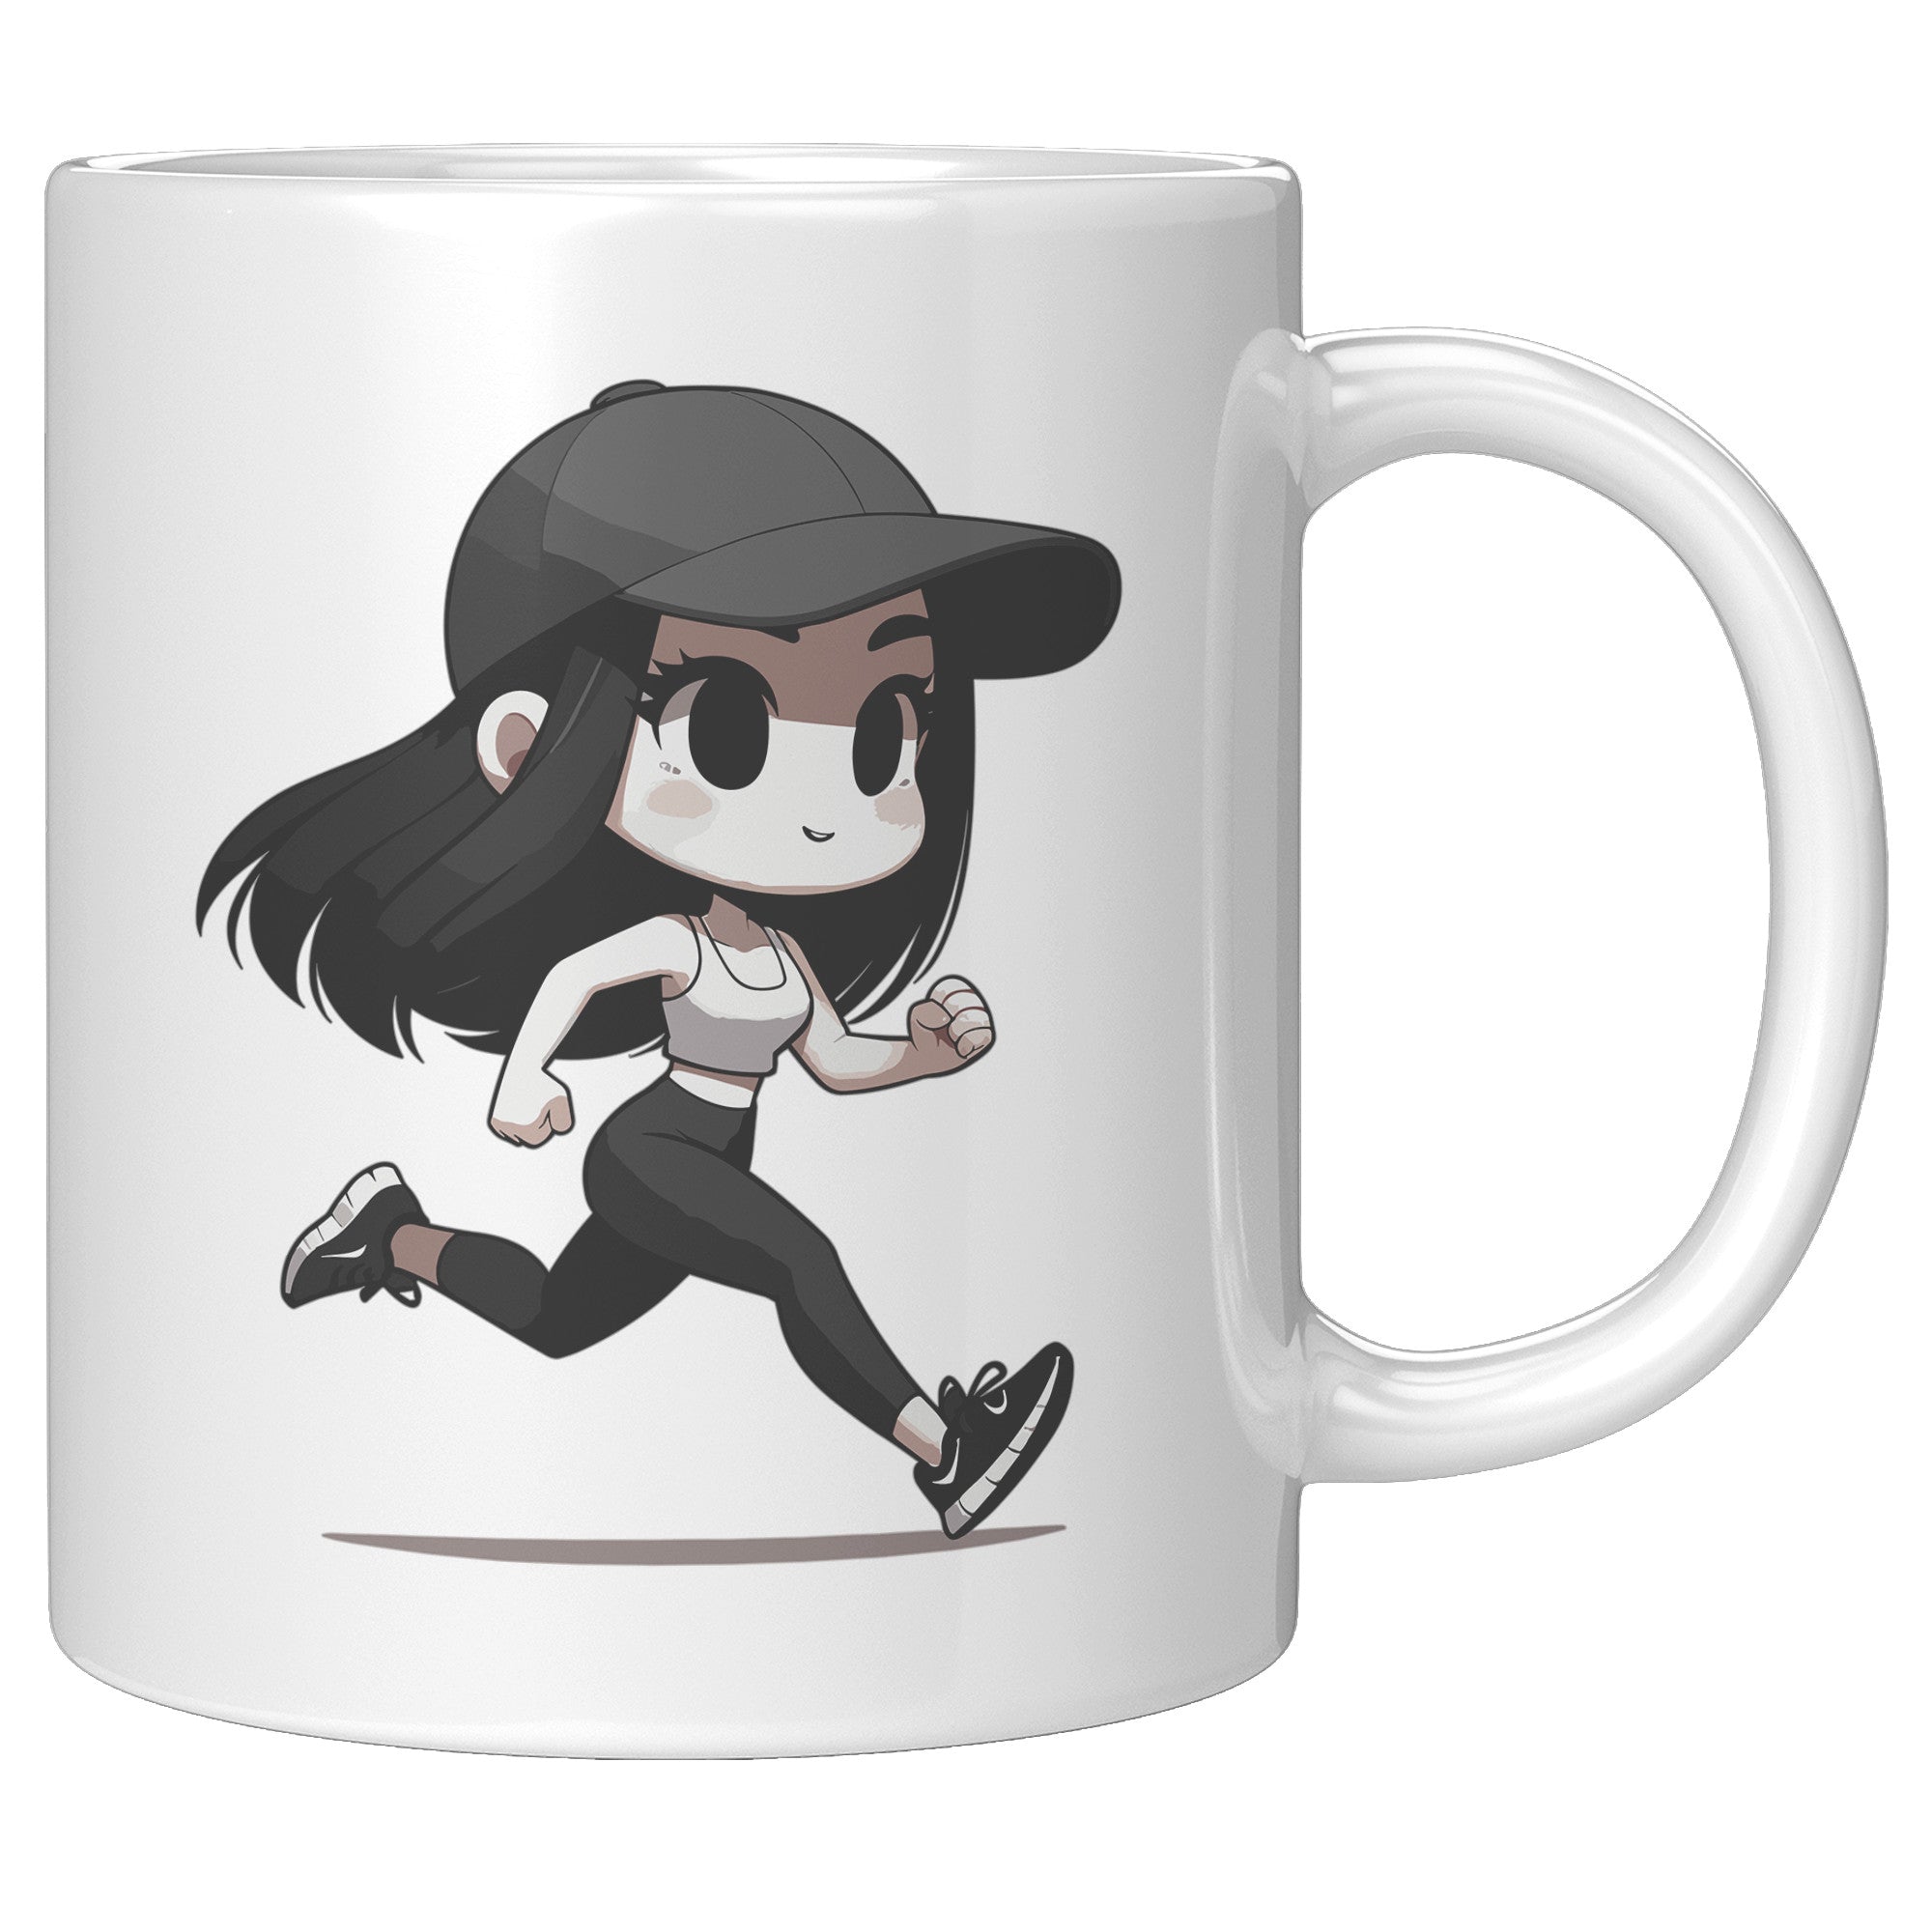 Female Runner Coffee Mug - Inspirational Running Quotes Cup - Perfect Gift for Women Runners - Motivational Marathoner's Morning Brew" - C